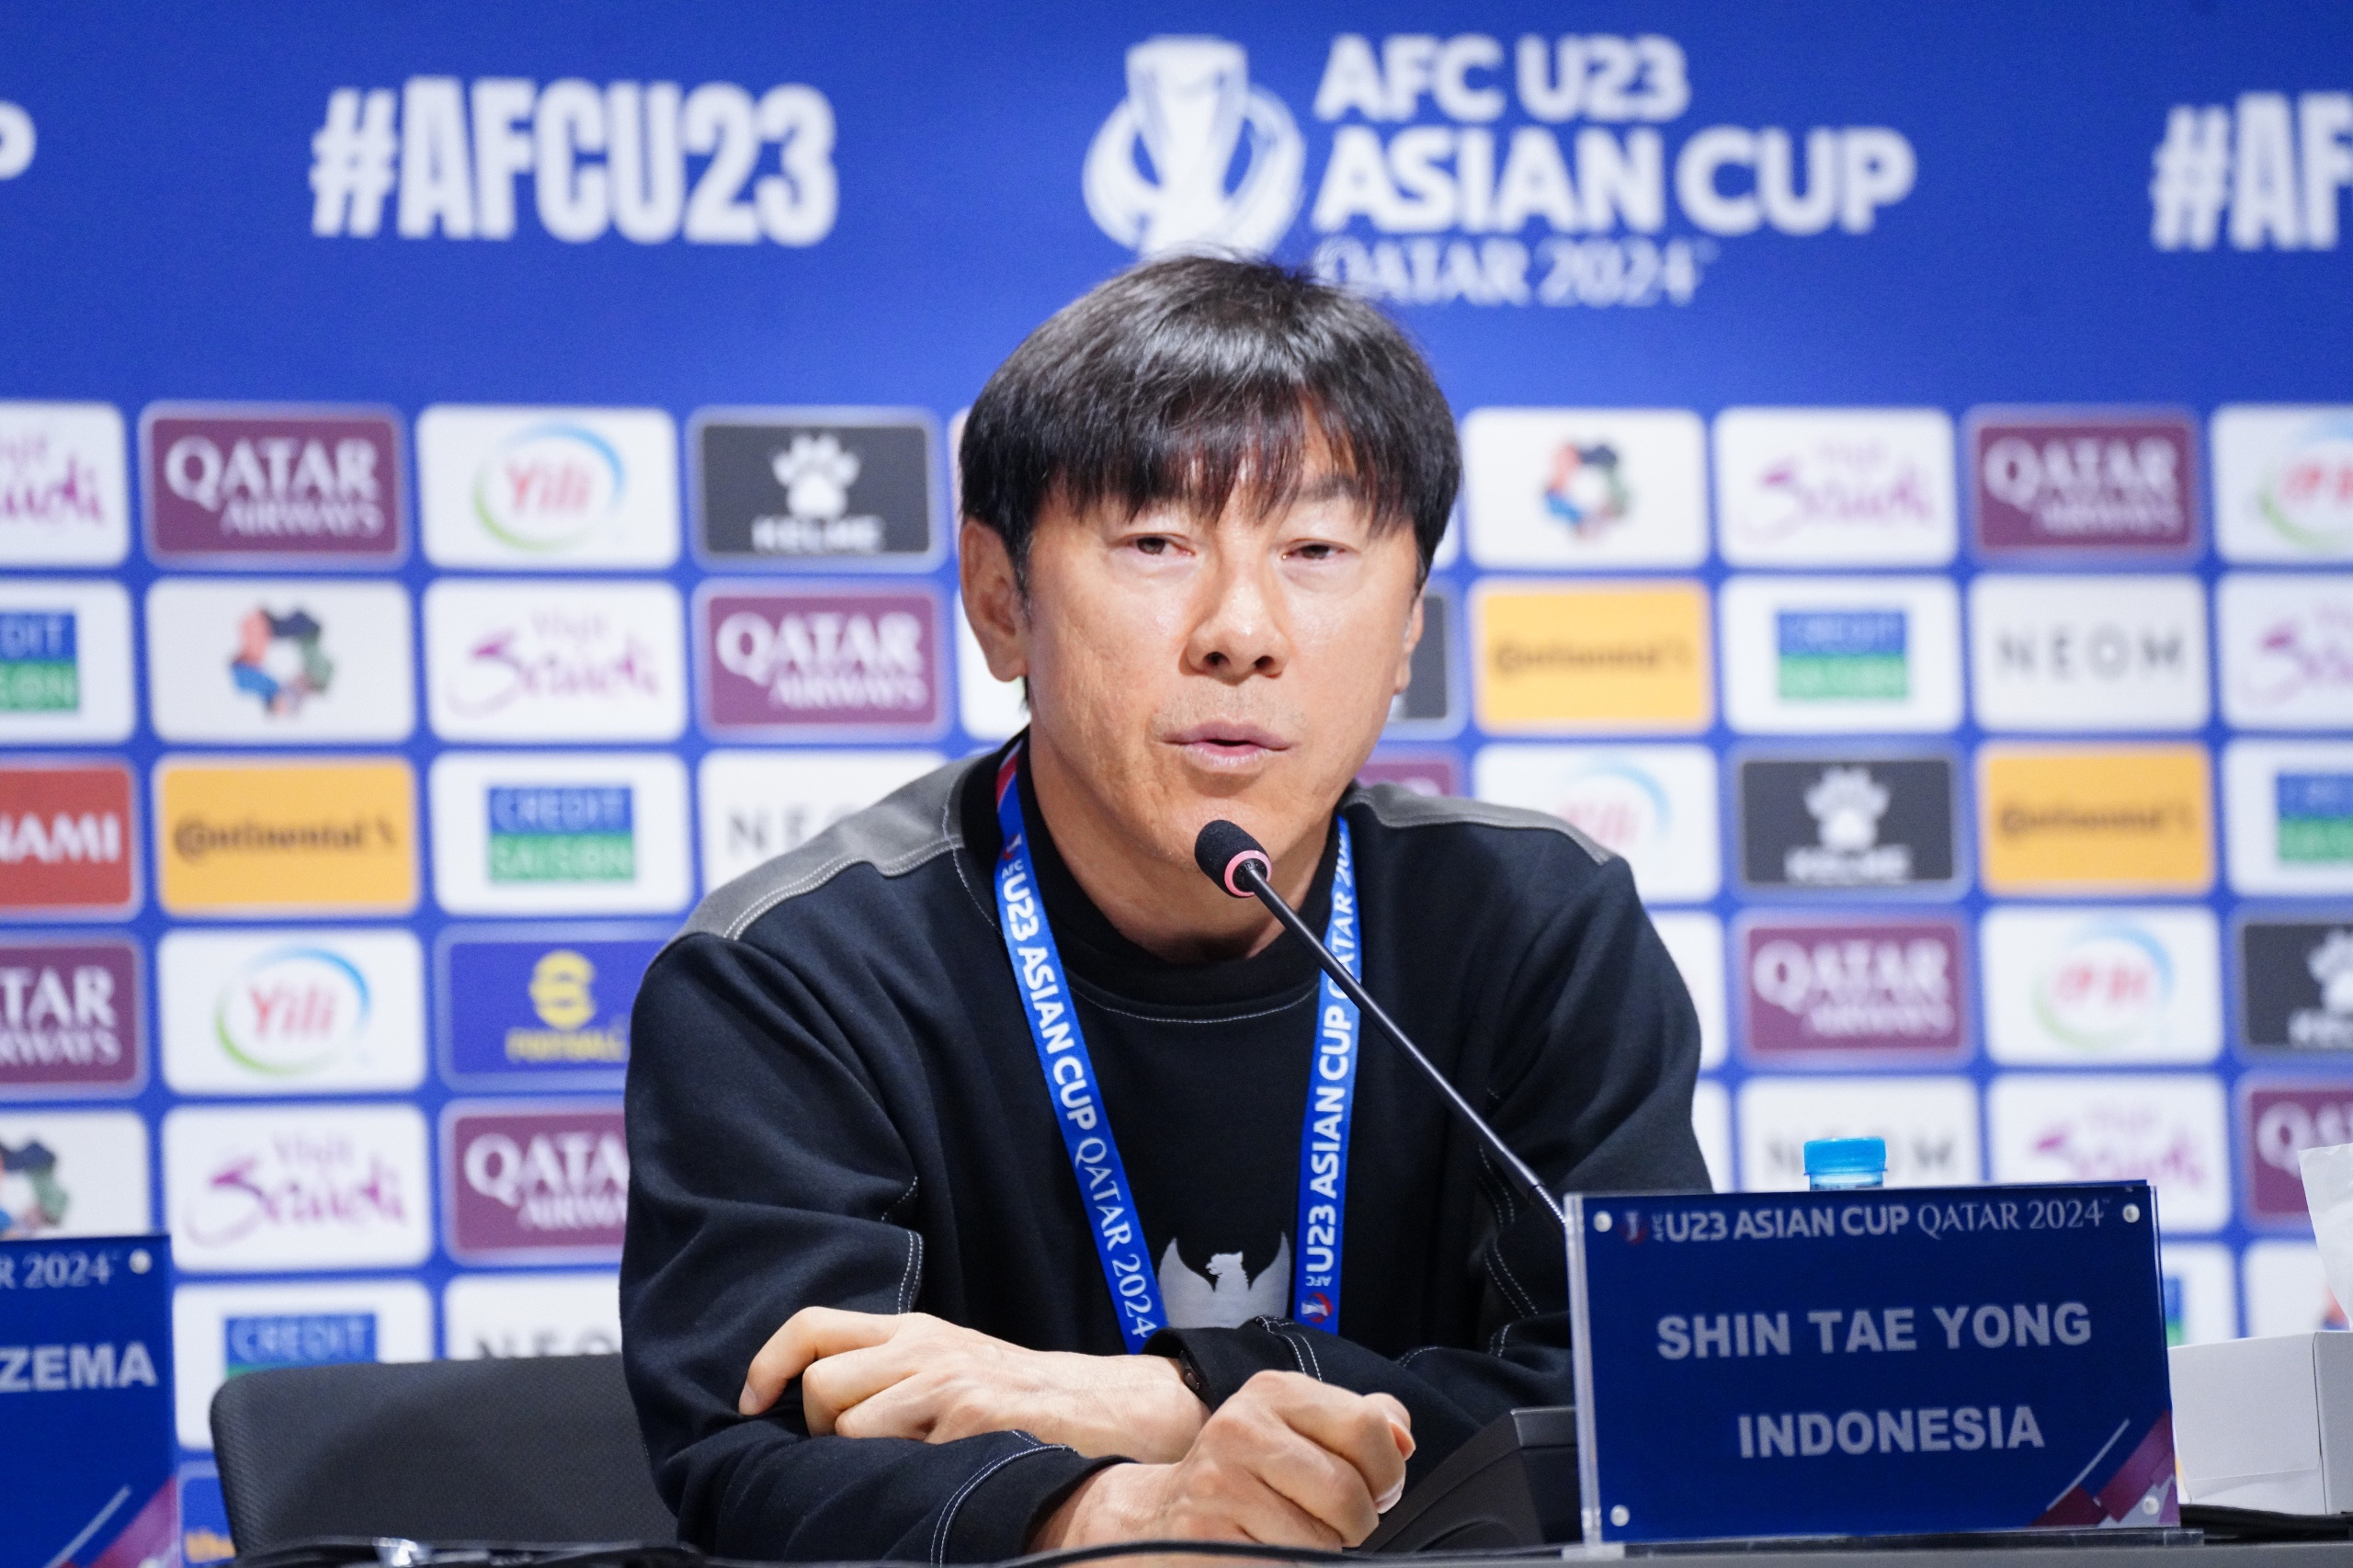 Timas U-23 Indonesia vs Korea; Duel Sarat Emosional Bagi Shin Tae Yong - JPNN.com